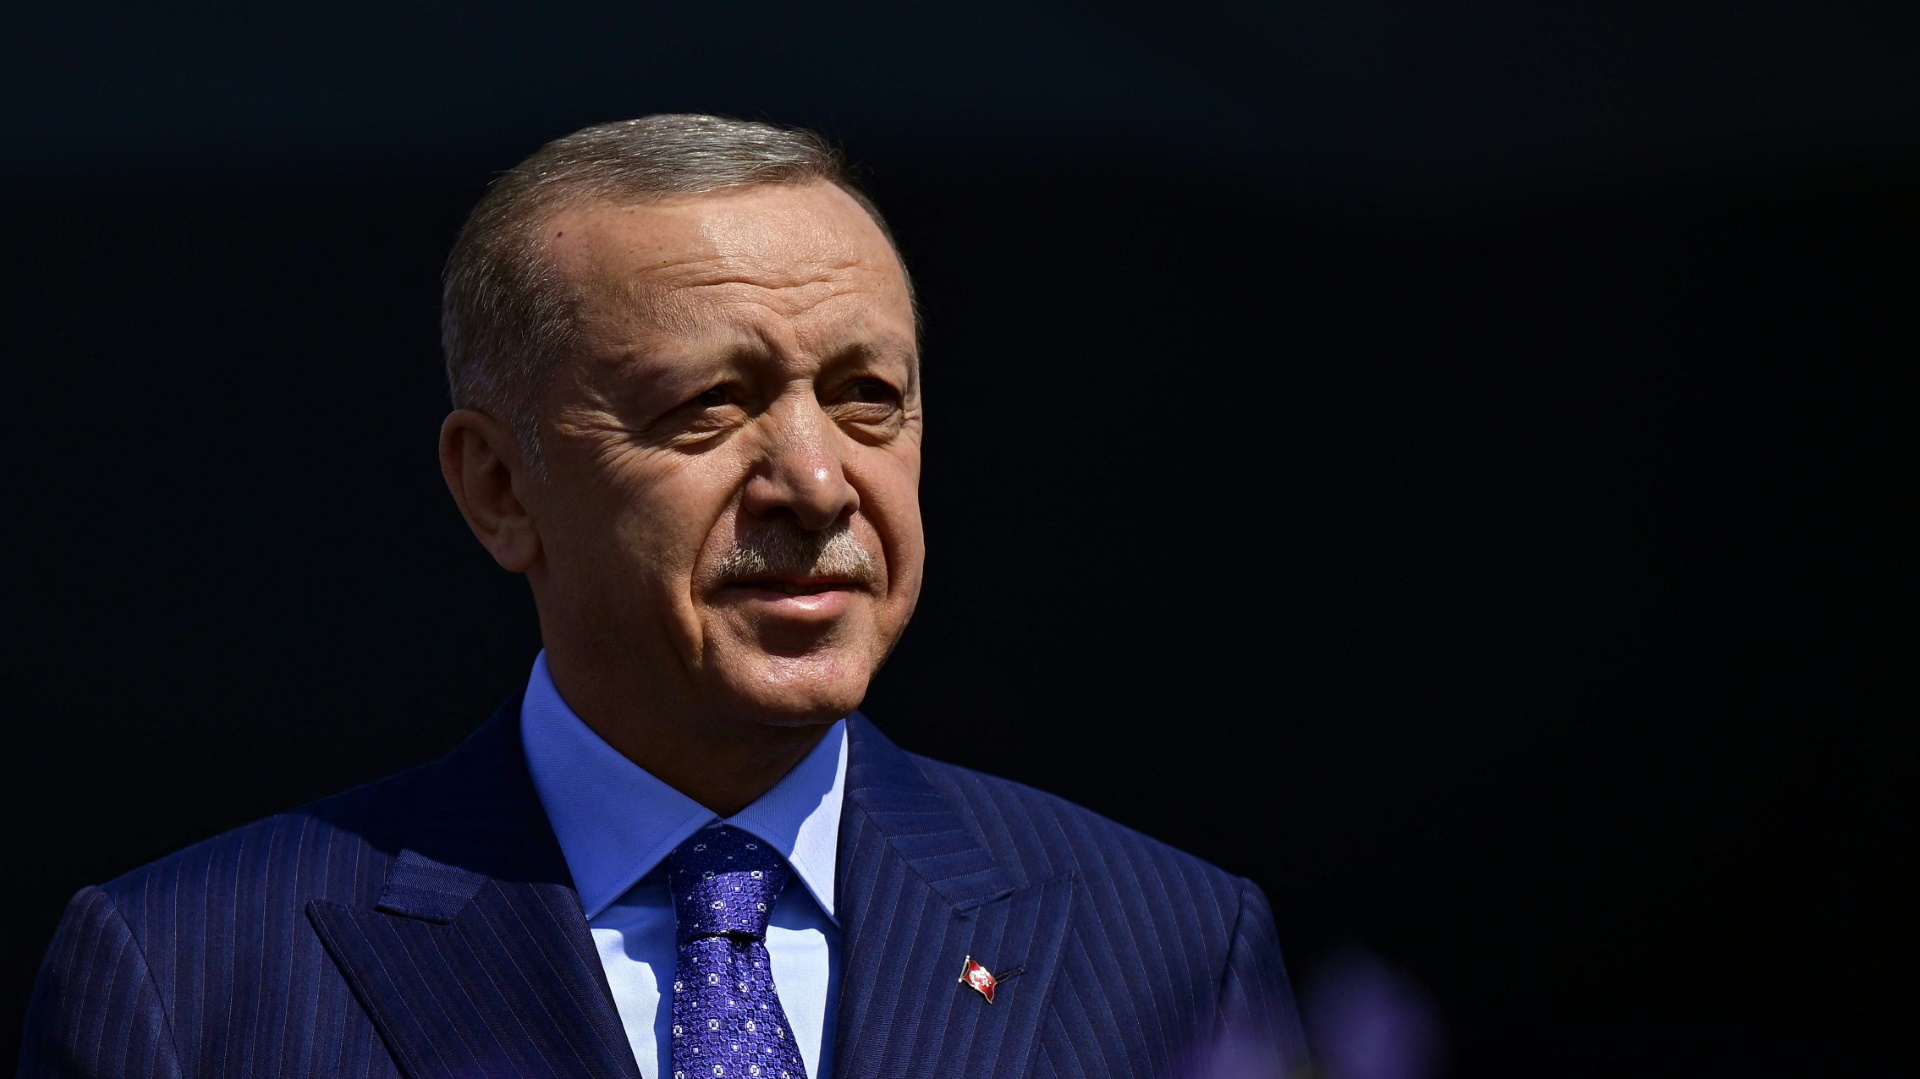 Kommt nach Berlin: Recep Tayyip Erdogan